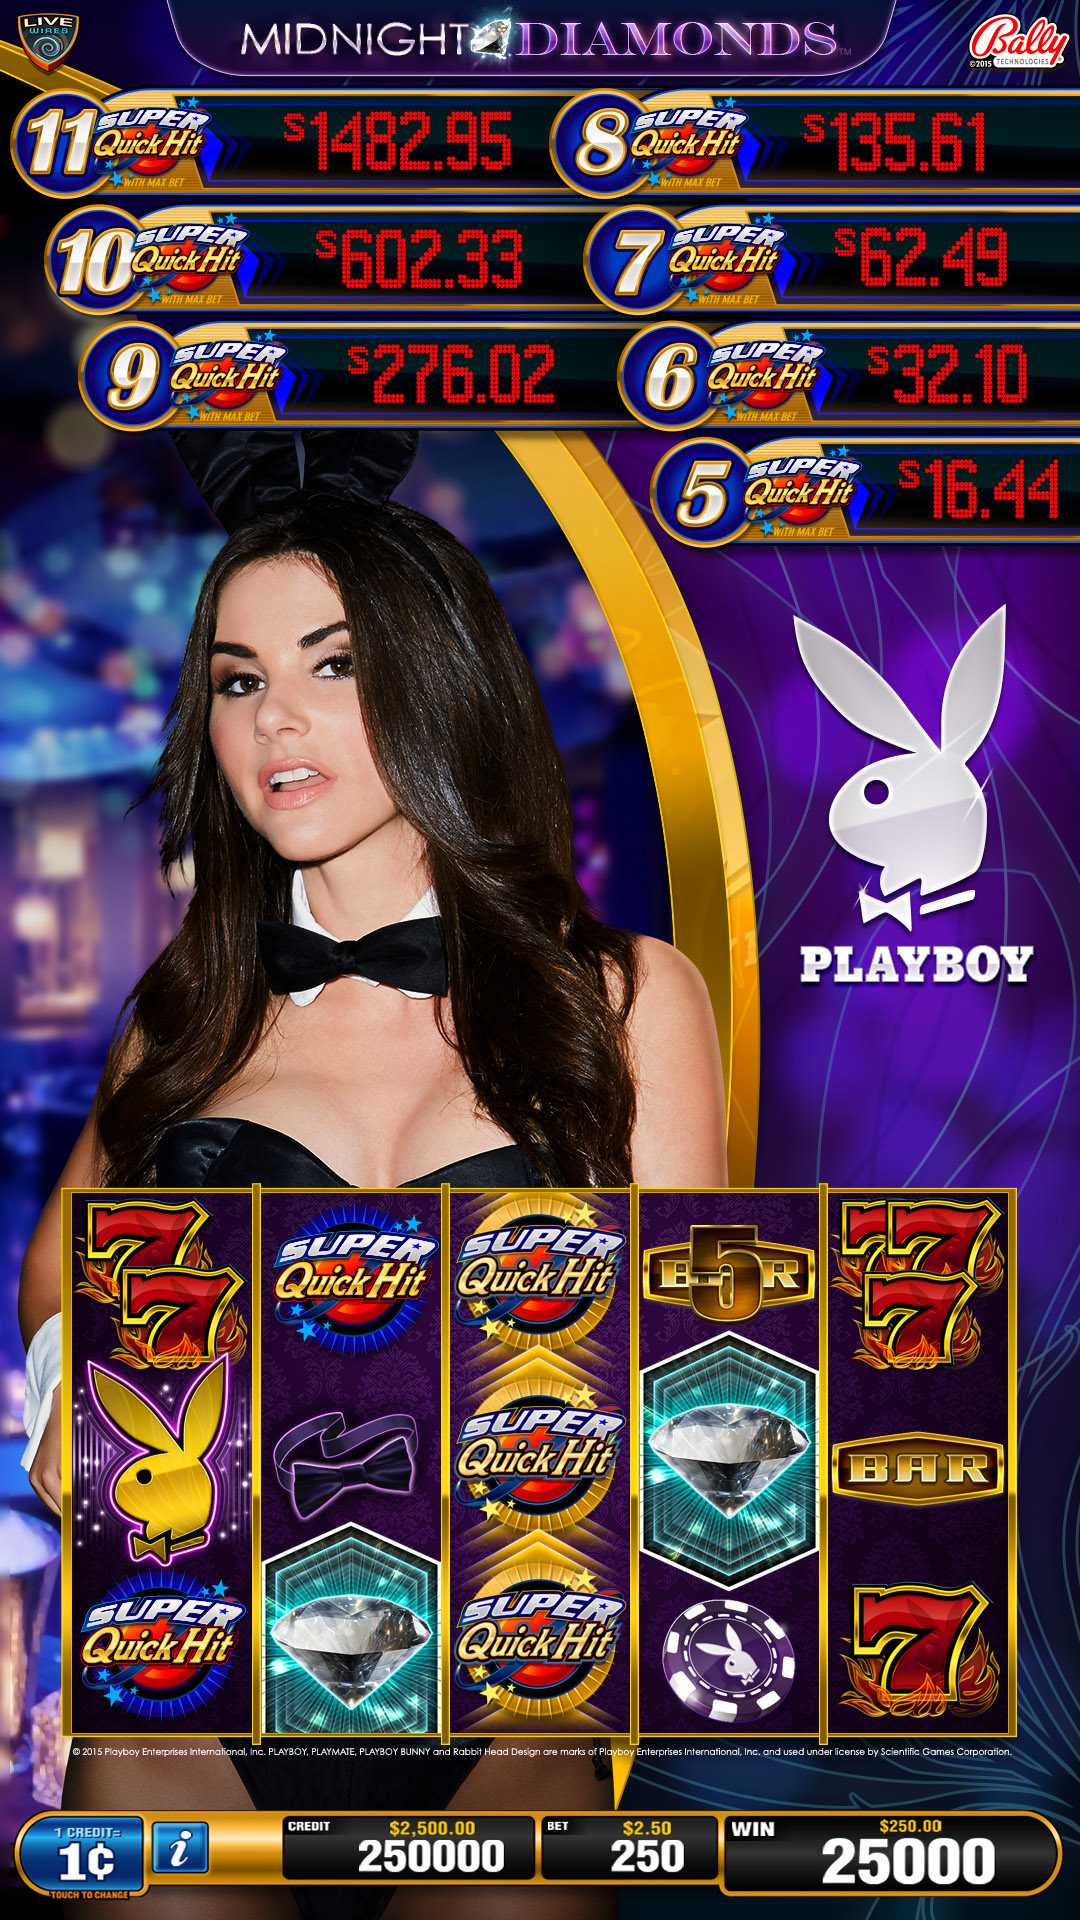 Playboy Slot Games